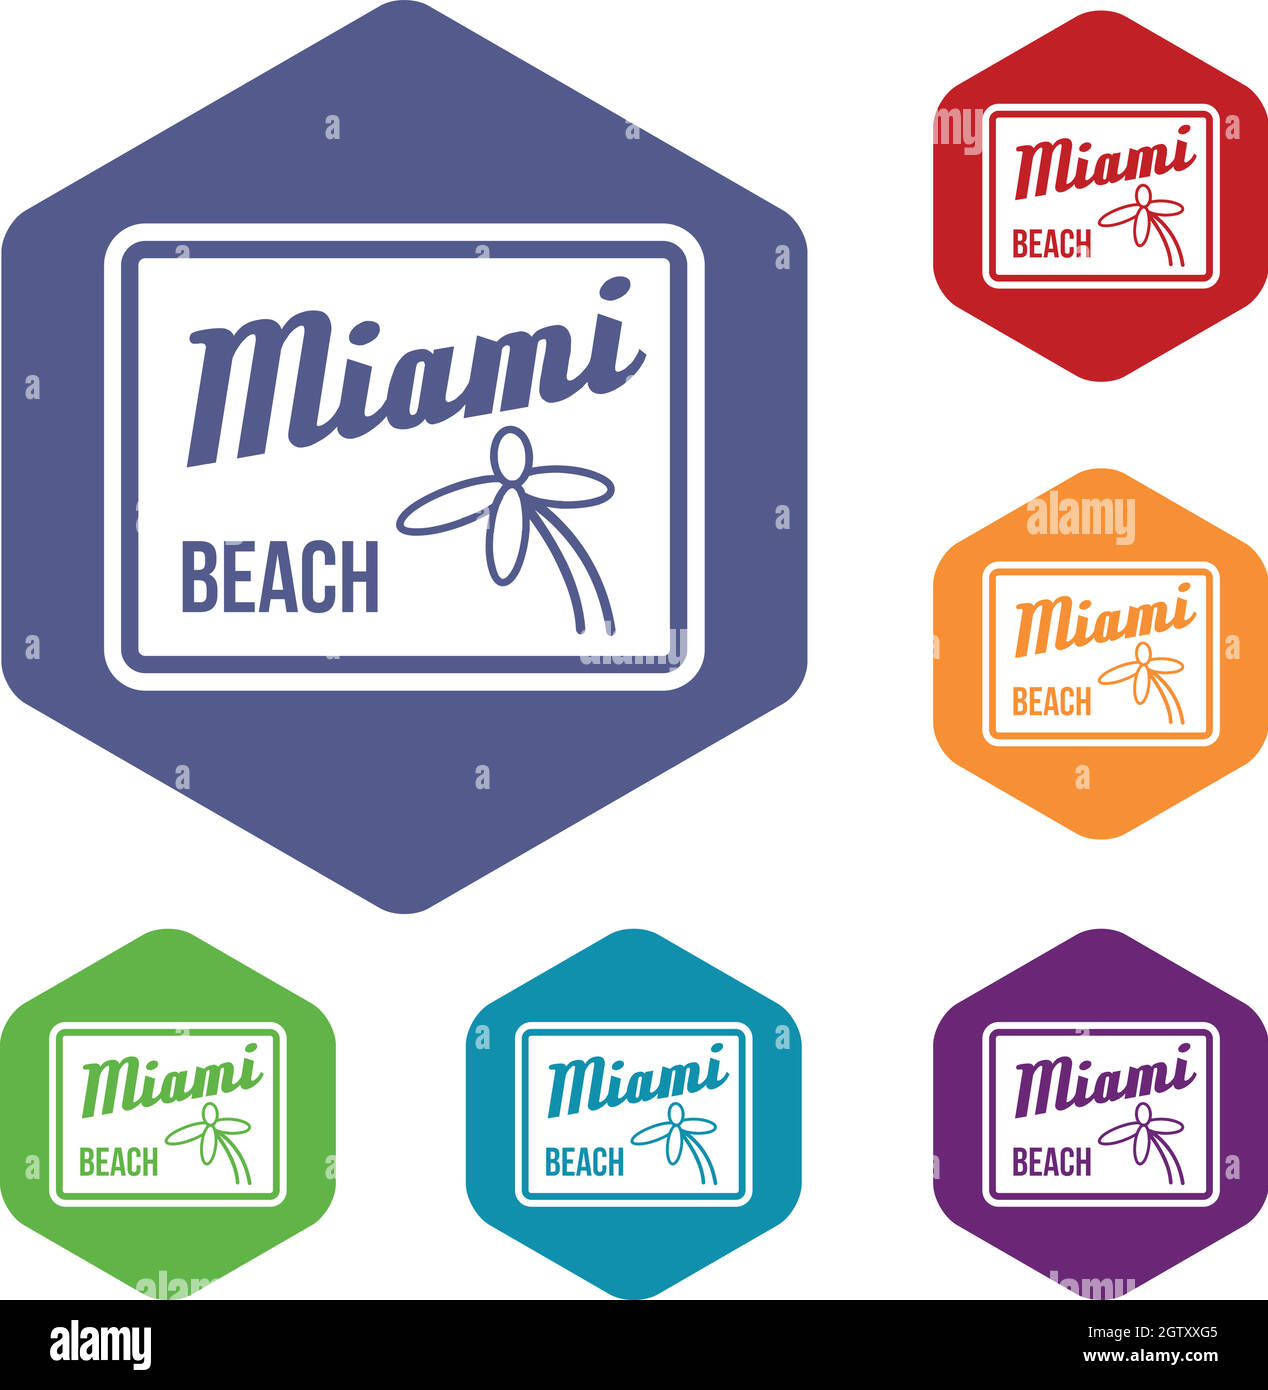 Miami beach icons set Stock Vector